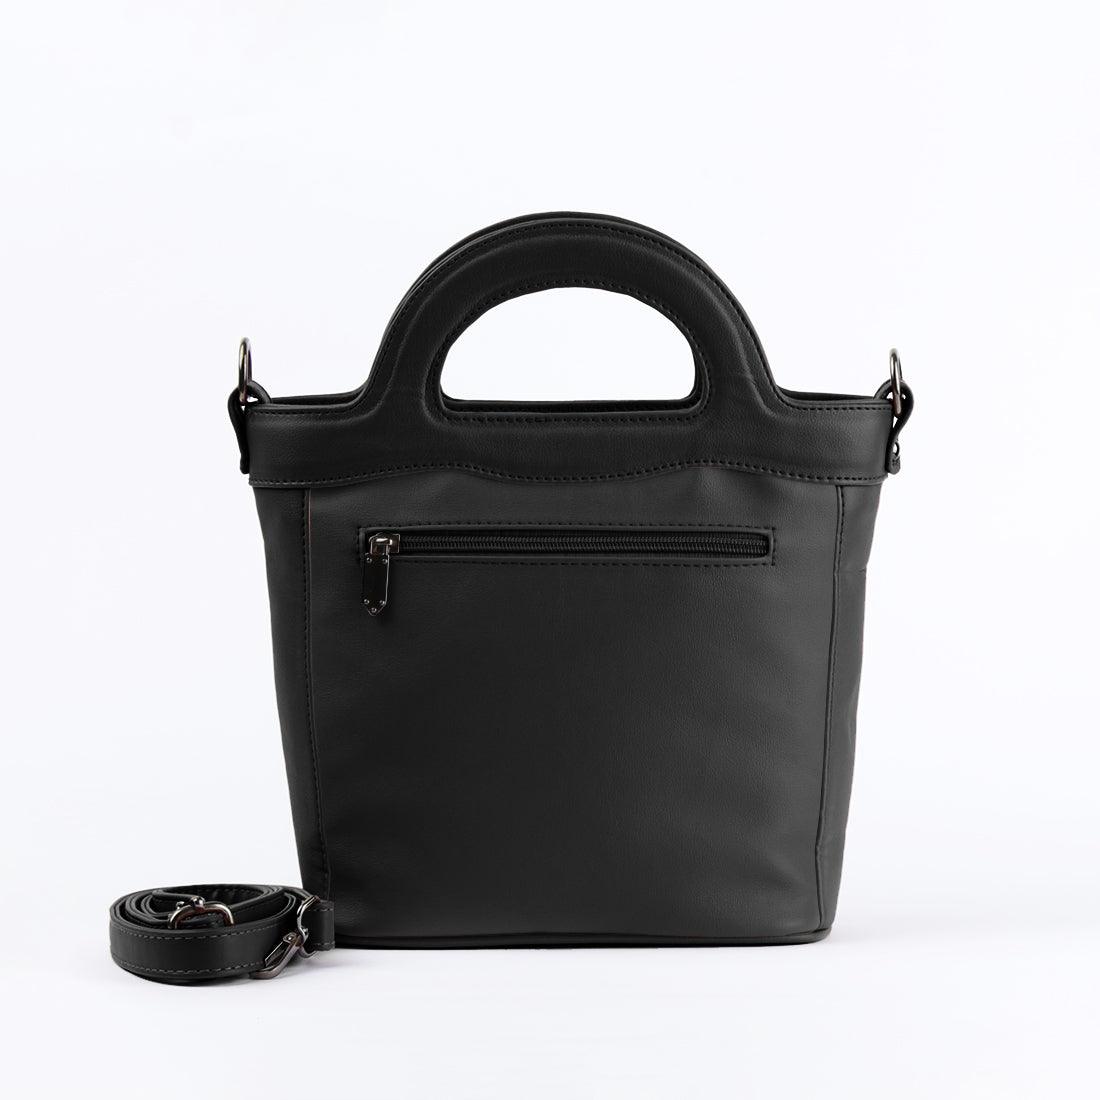 Black Top Handle Handbag Enjoy Summer - CANVAEGYPT